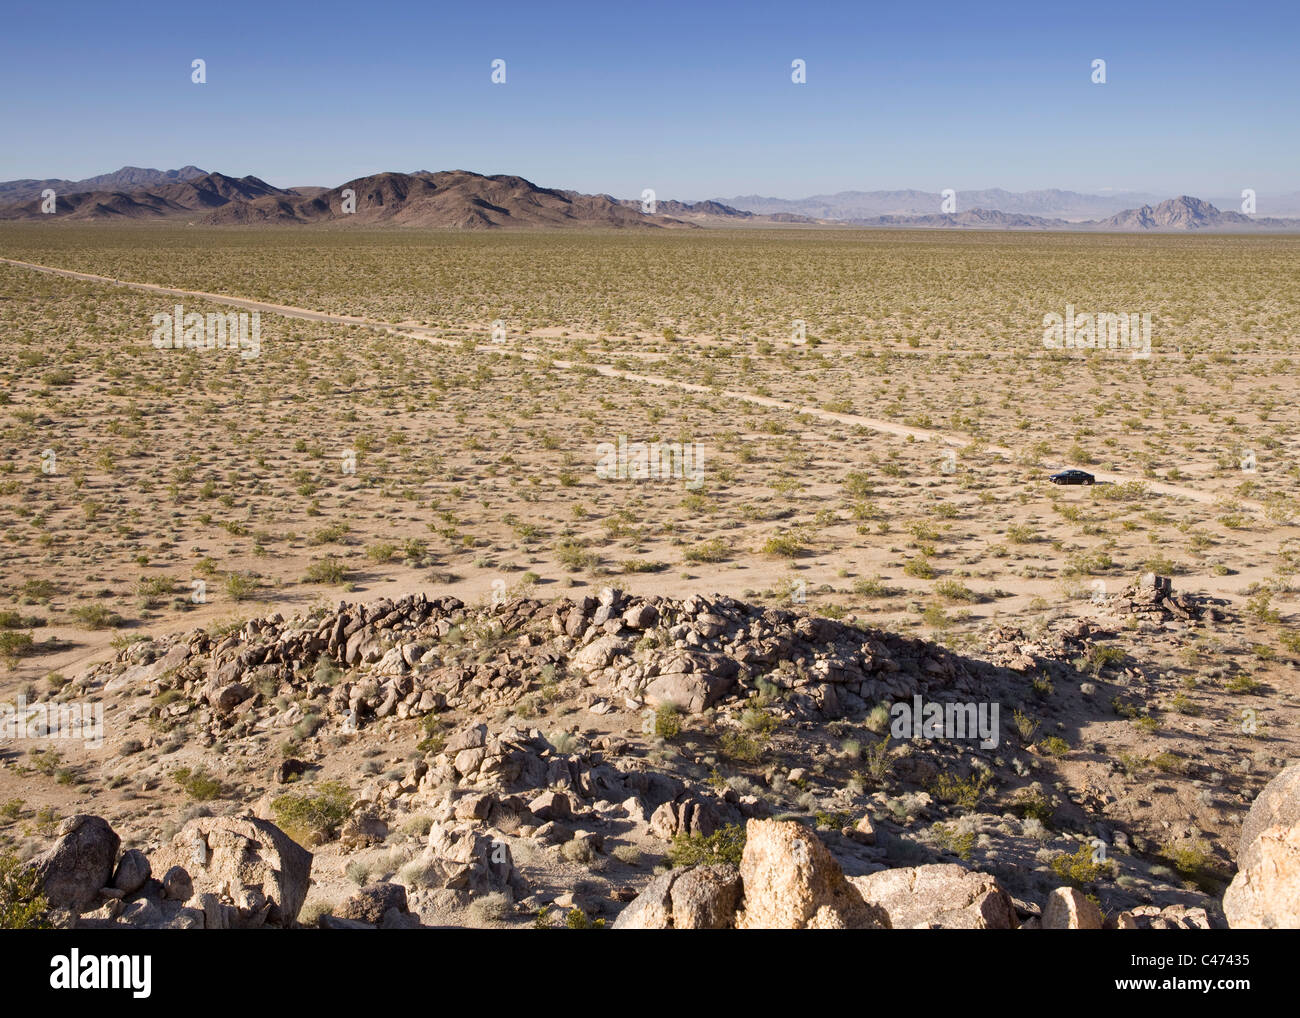 A dirt road crosses the Mojave desert landscape - California USA Stock Photo